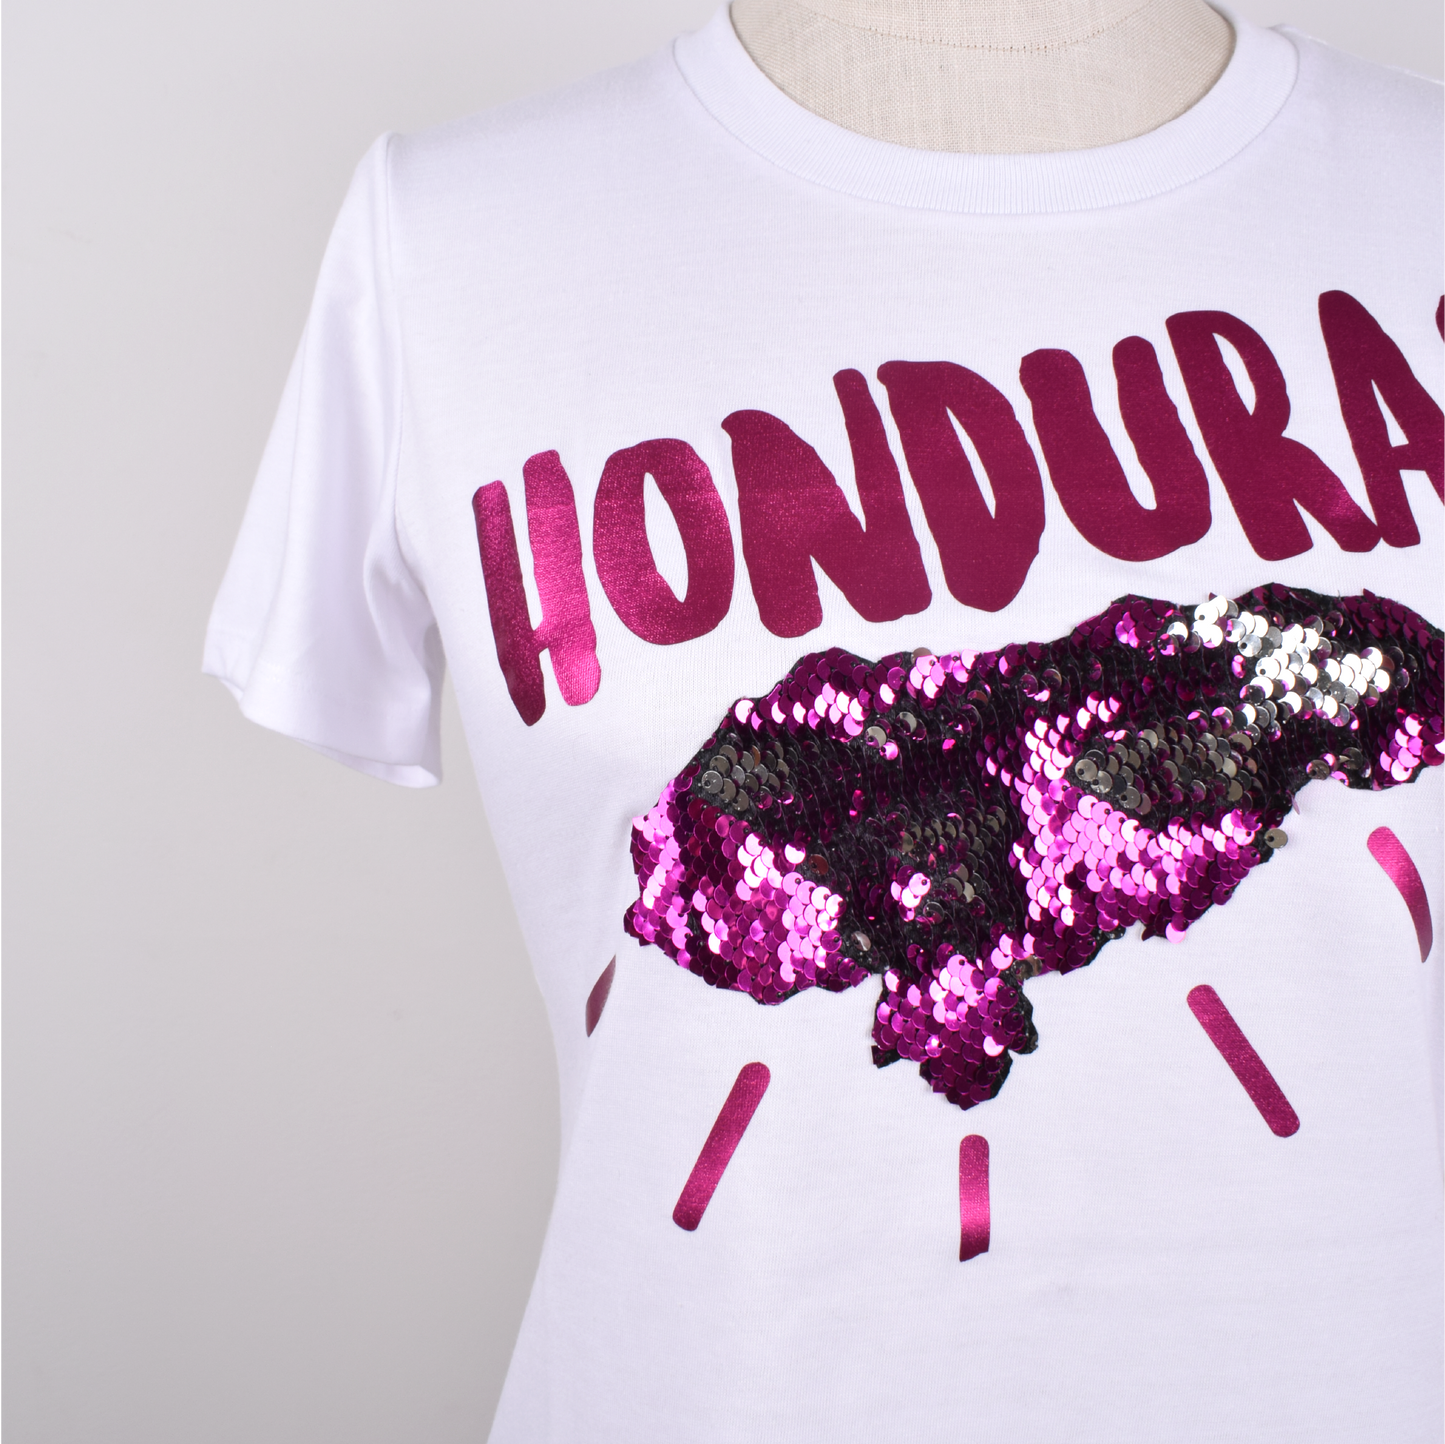 Honduras Pink Mapa Lentejuelas Reversible Camiseta Mujer